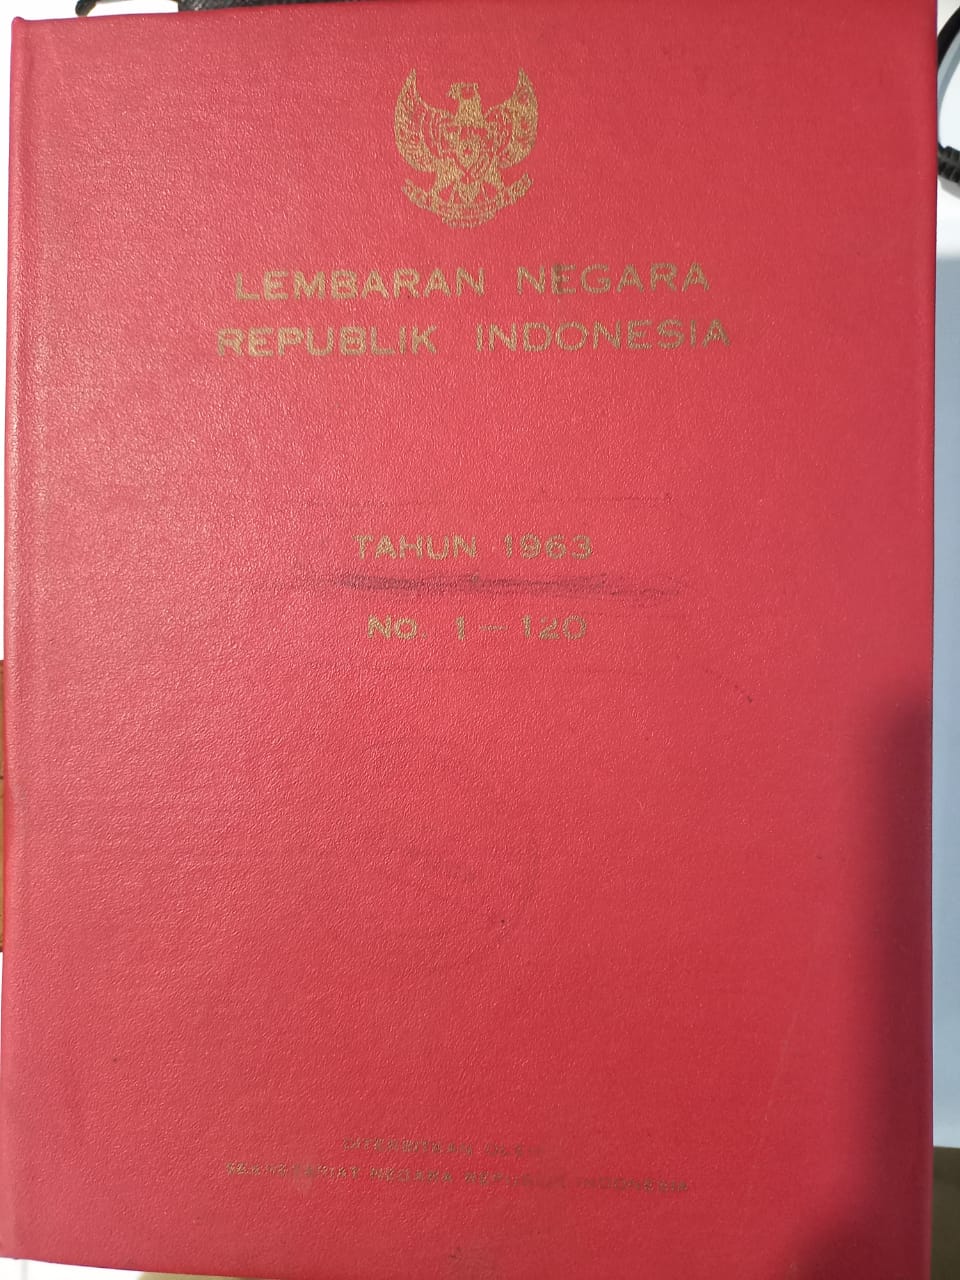 LEMBARAN NEGARA REPUBLIK INDONESIA TAHUN 1963 NO. 1- 120